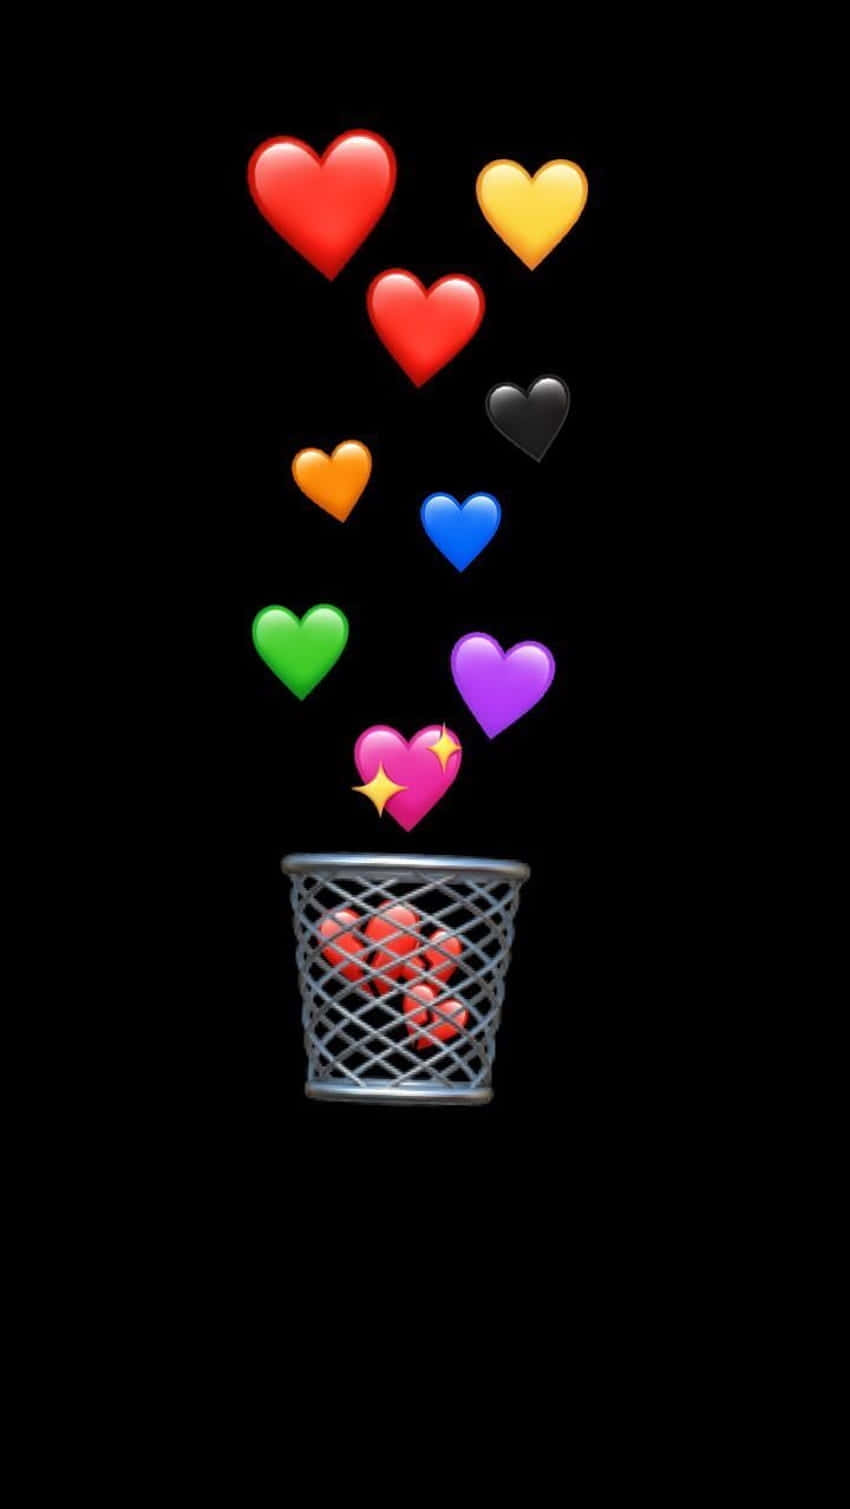 Colorful Hearts Falling Into Trash Bin Wallpaper